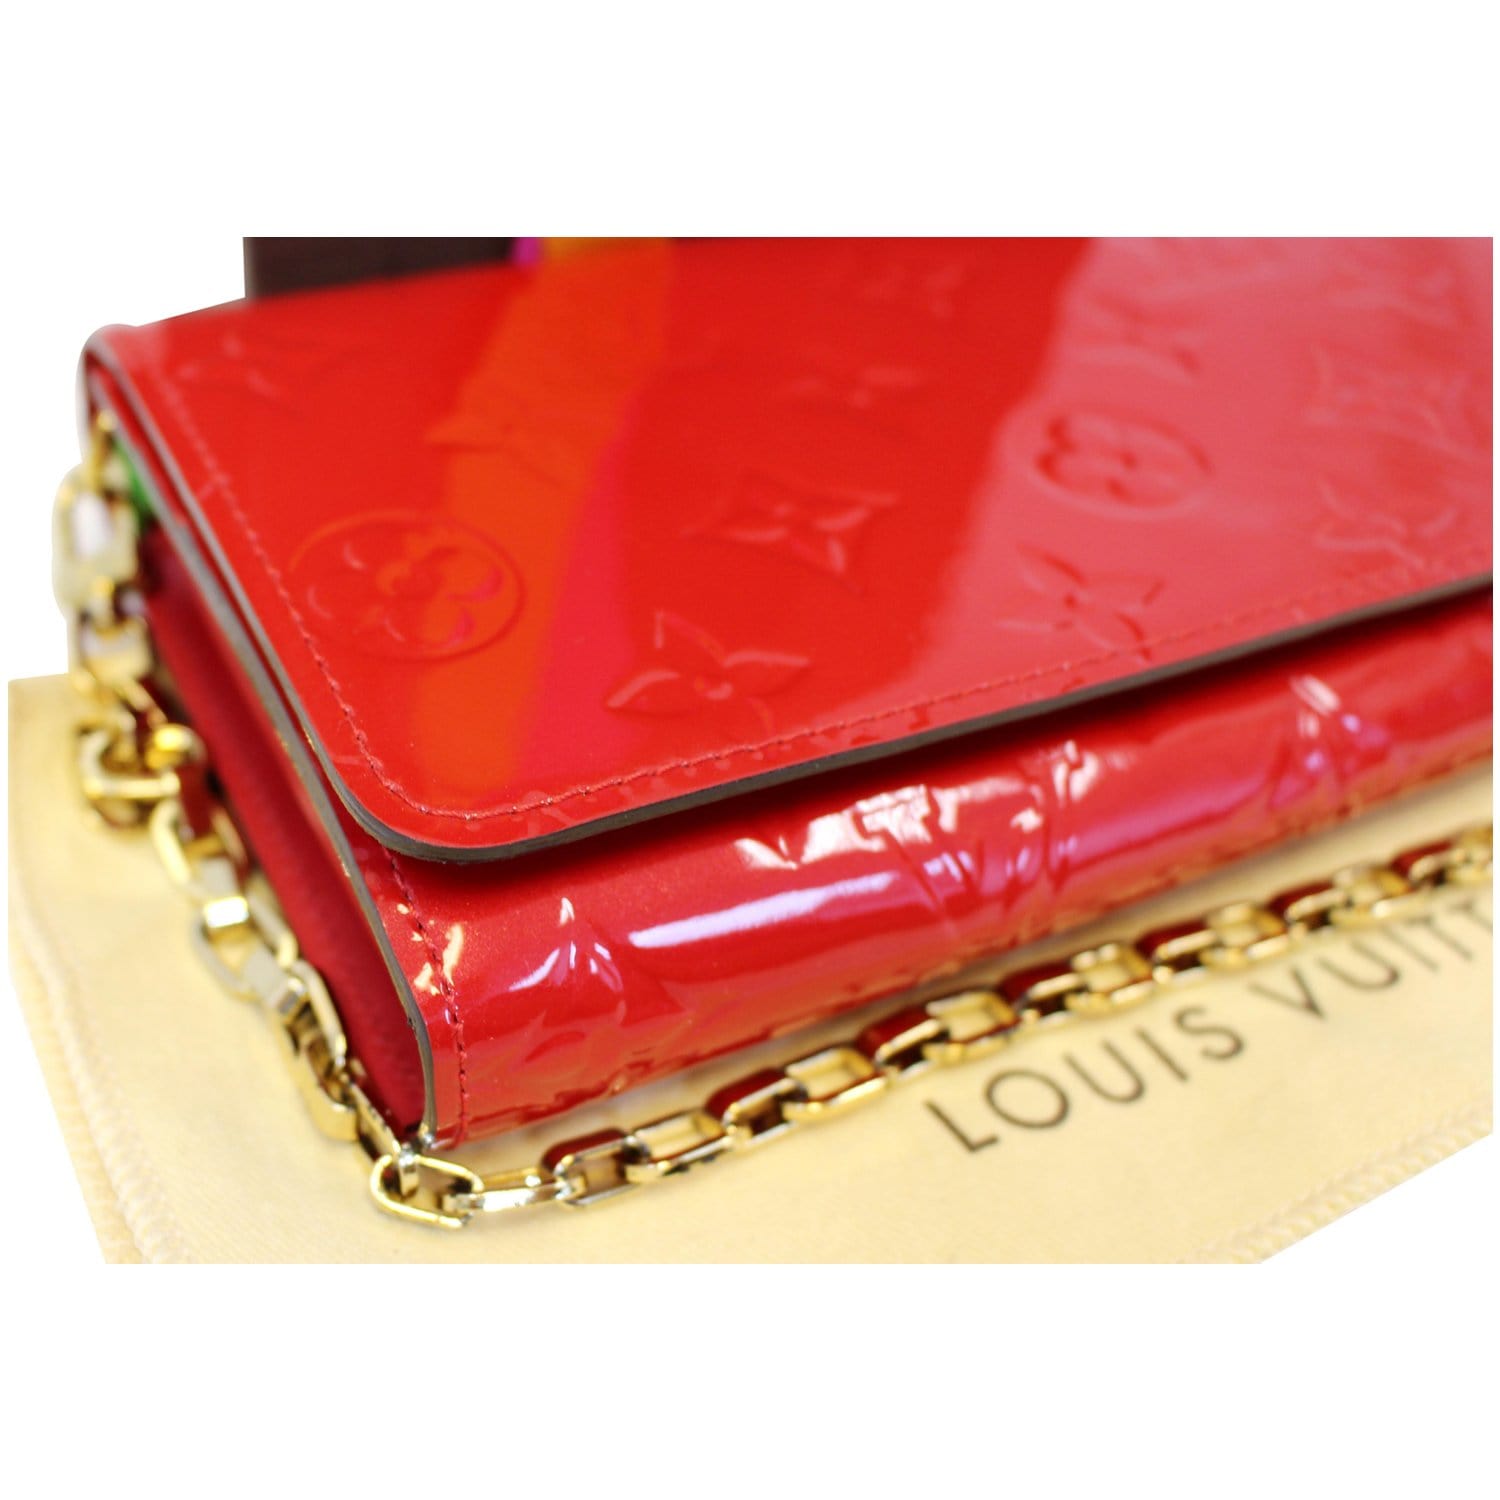 AUTHENTIC LOUIS VUITTON Vernis Red Patent Leather Double Snap Wallet